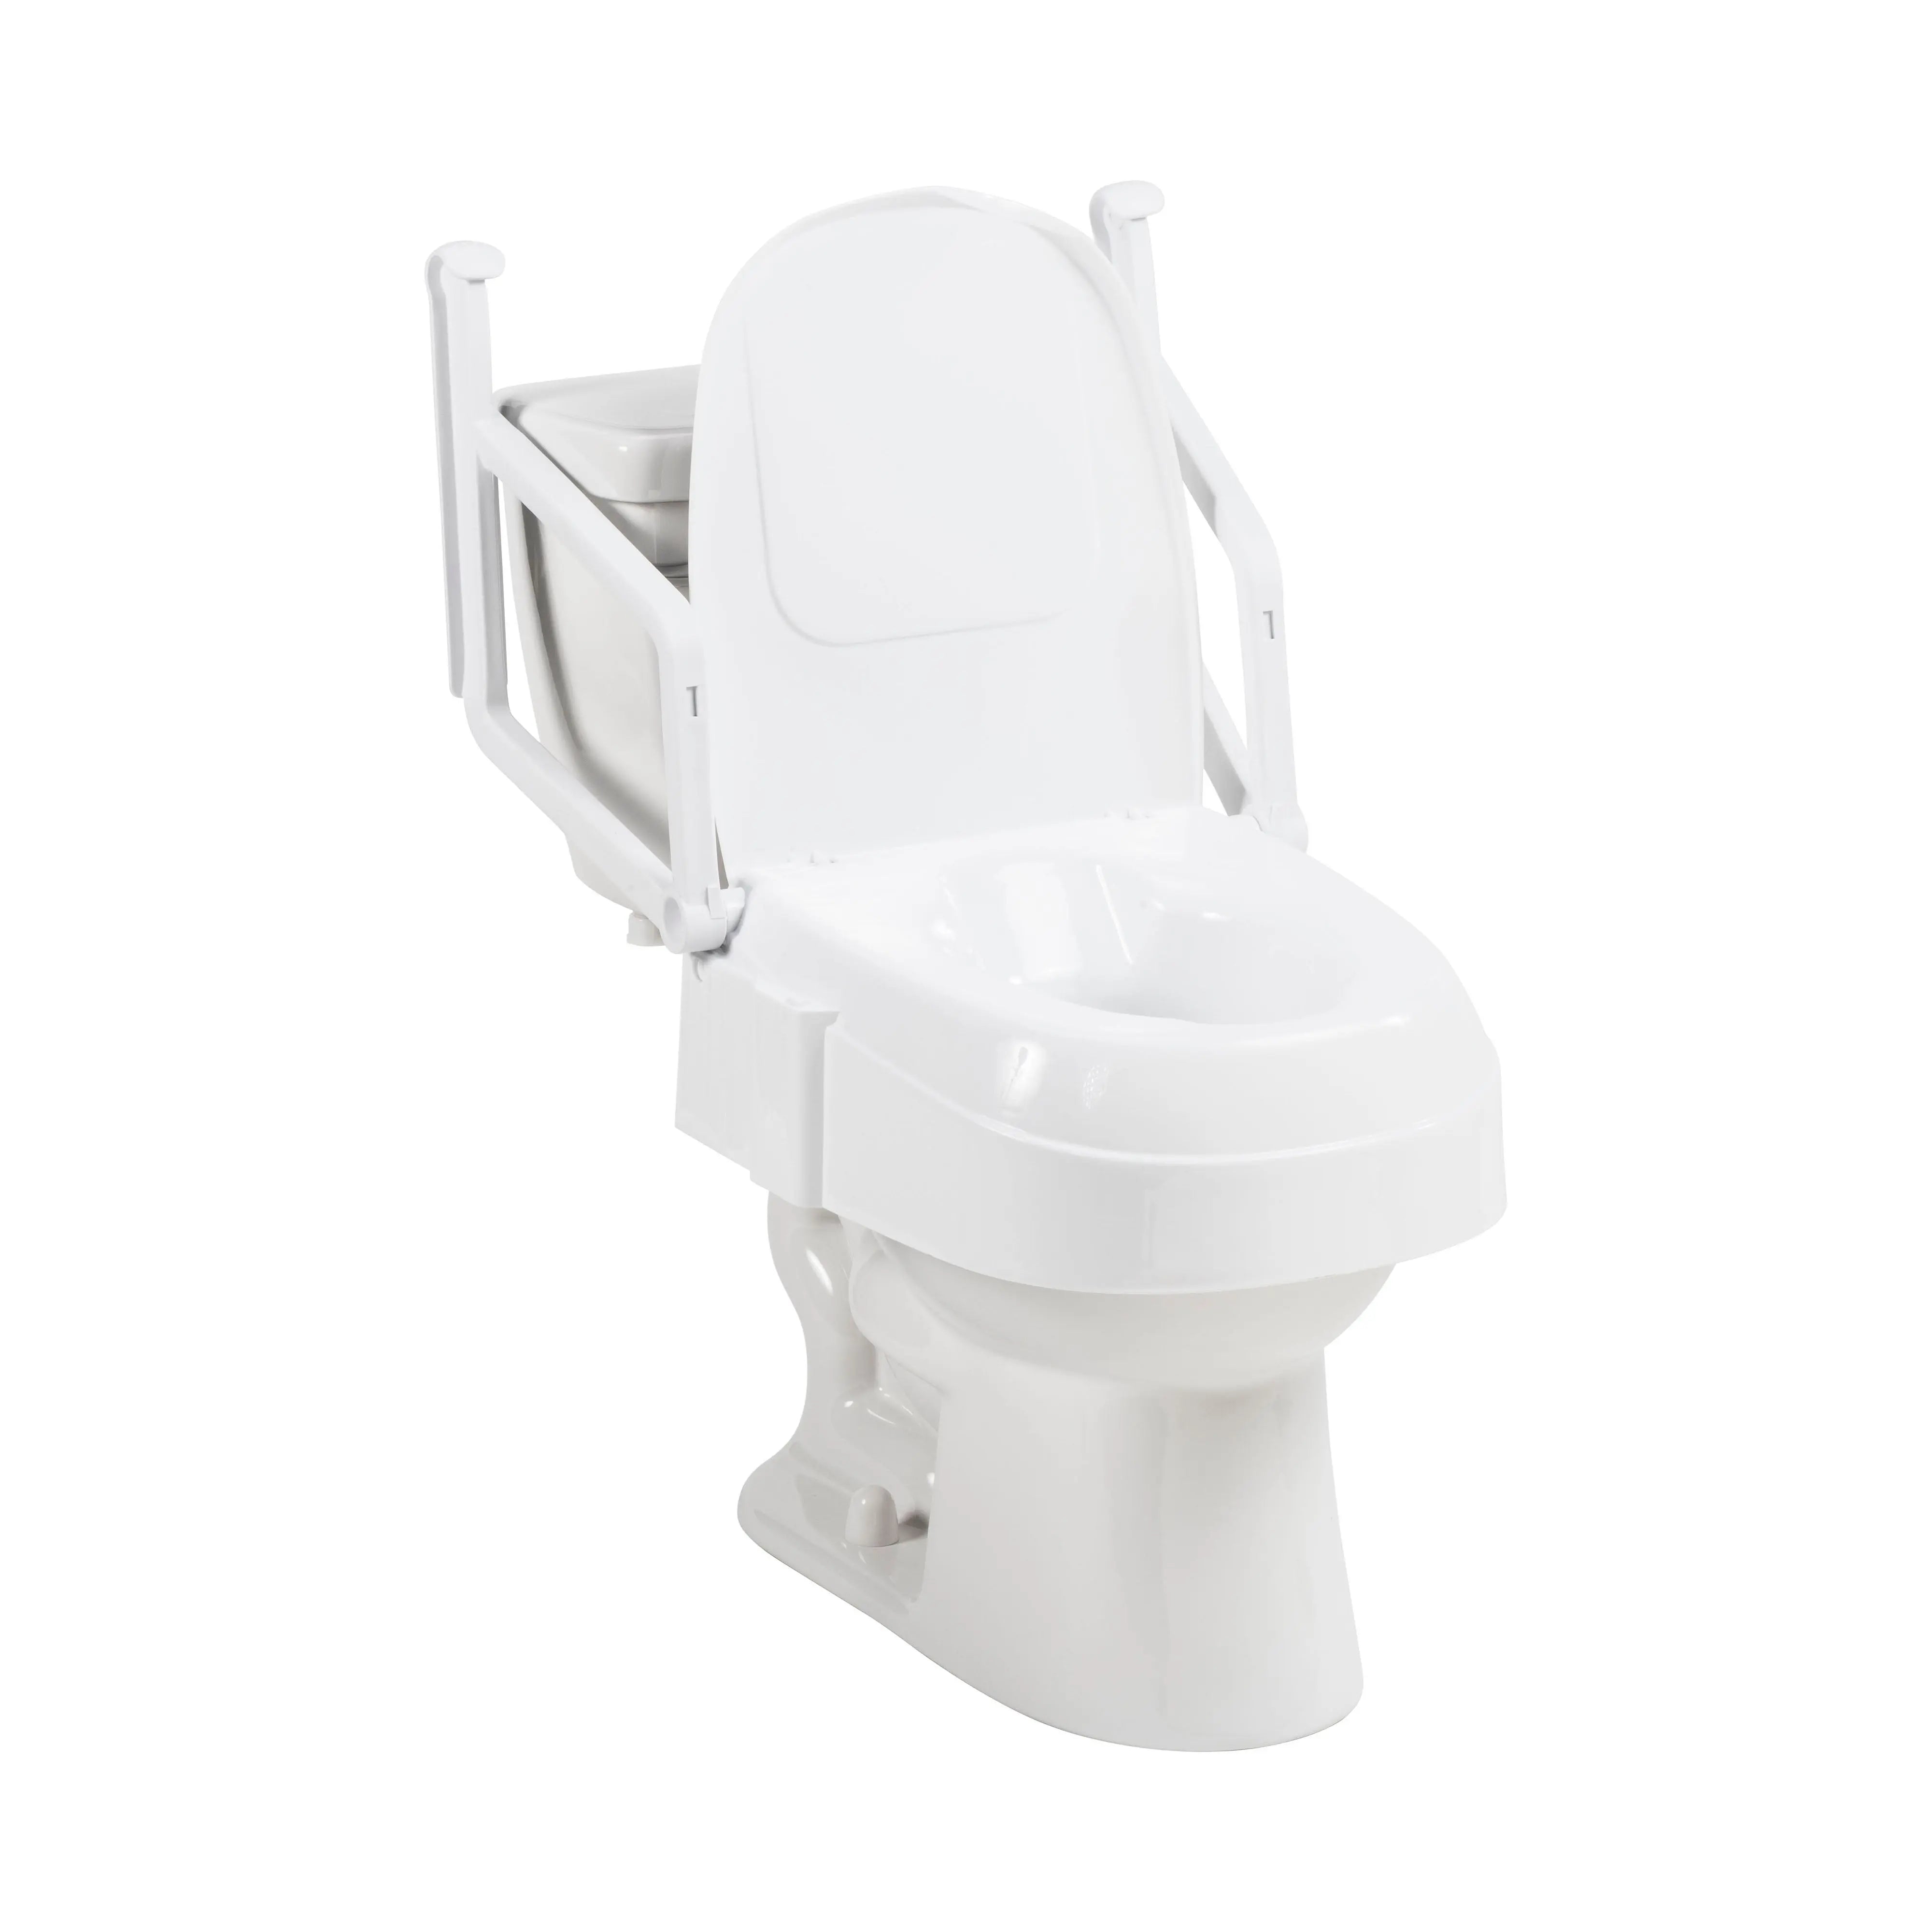 PreserveTech Universal Raised Toilet Seat - Home Health Store Inc